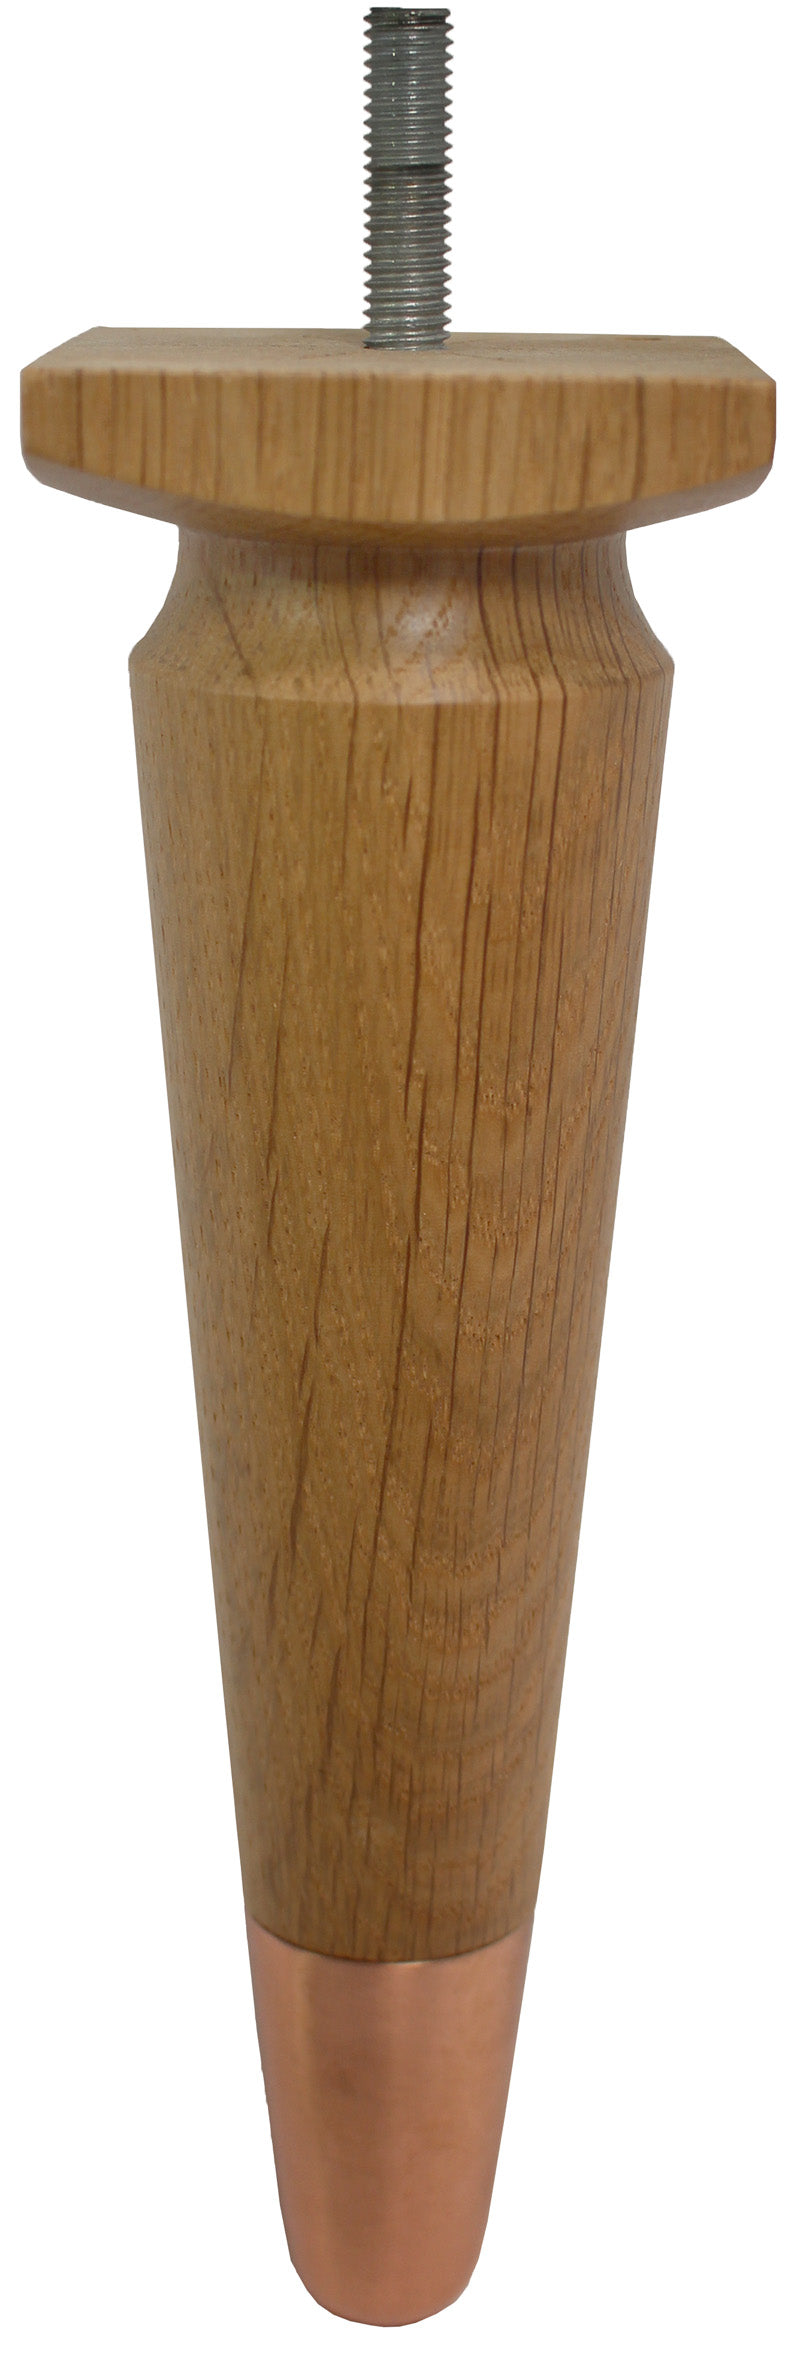 Thelma Solid Oak Furniture Legs - Natural Finish - Copper Slipper Cups - Set of 4